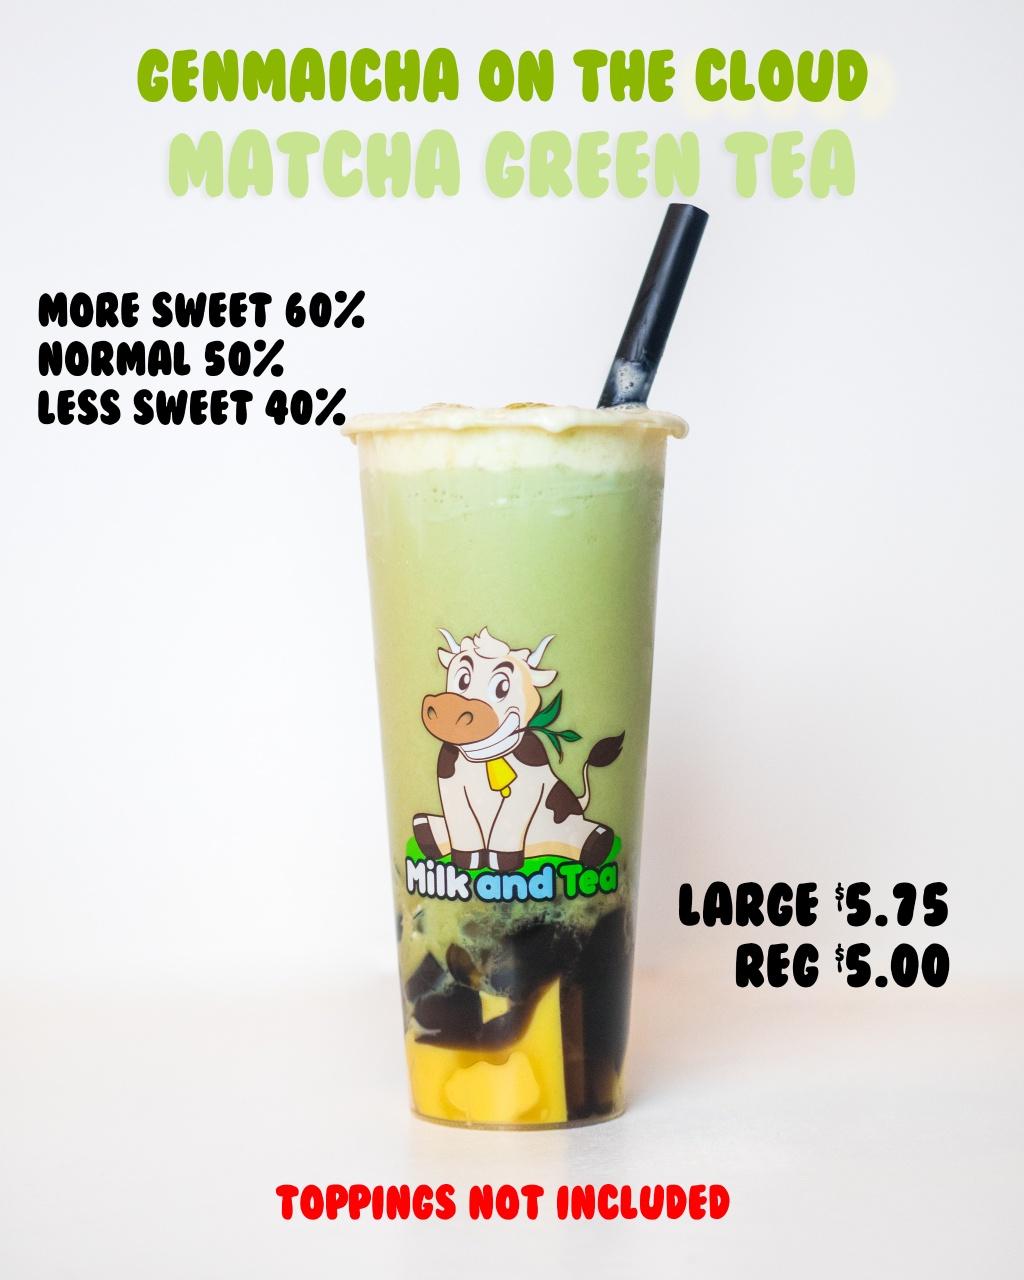 Image for Matcha Milk Tea.